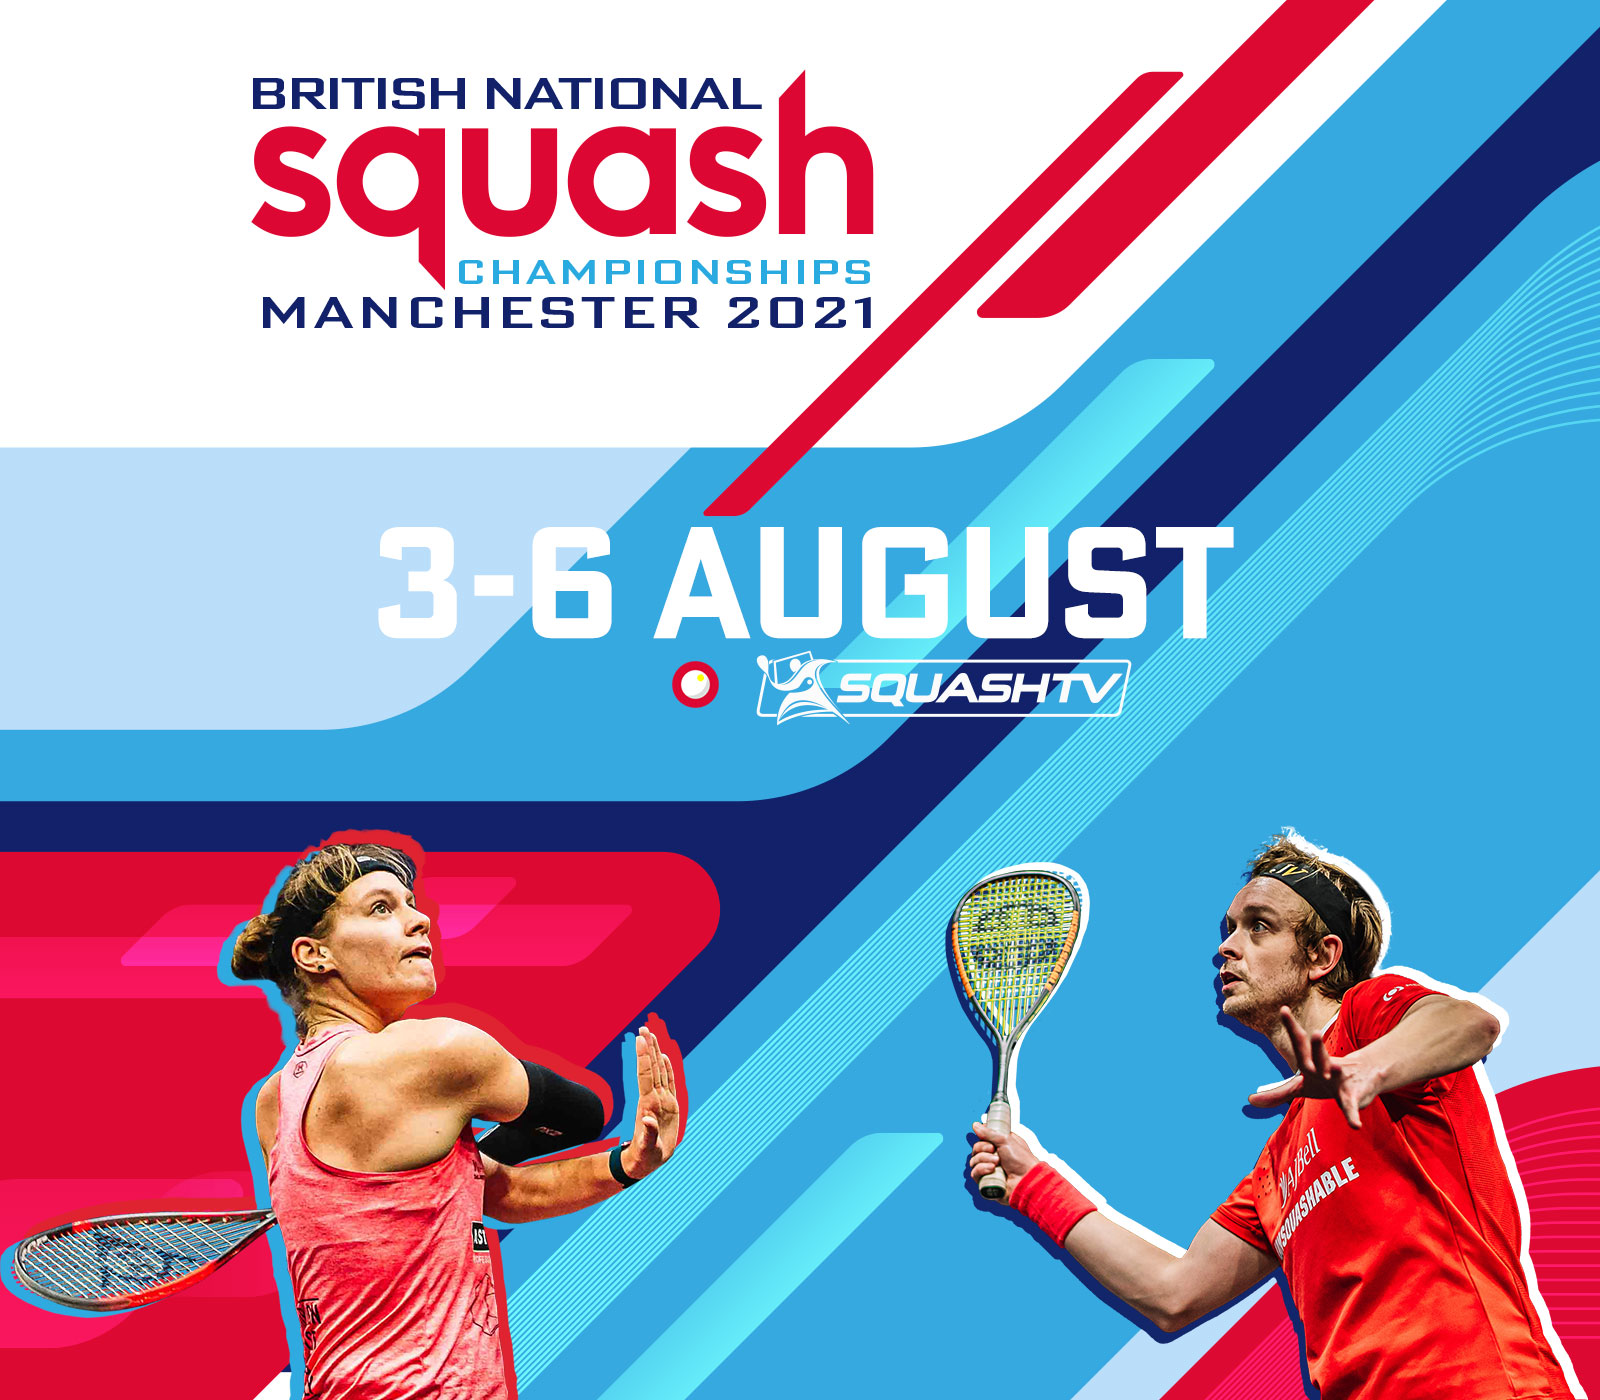 England Squash 2021 British National Squash Championships to be